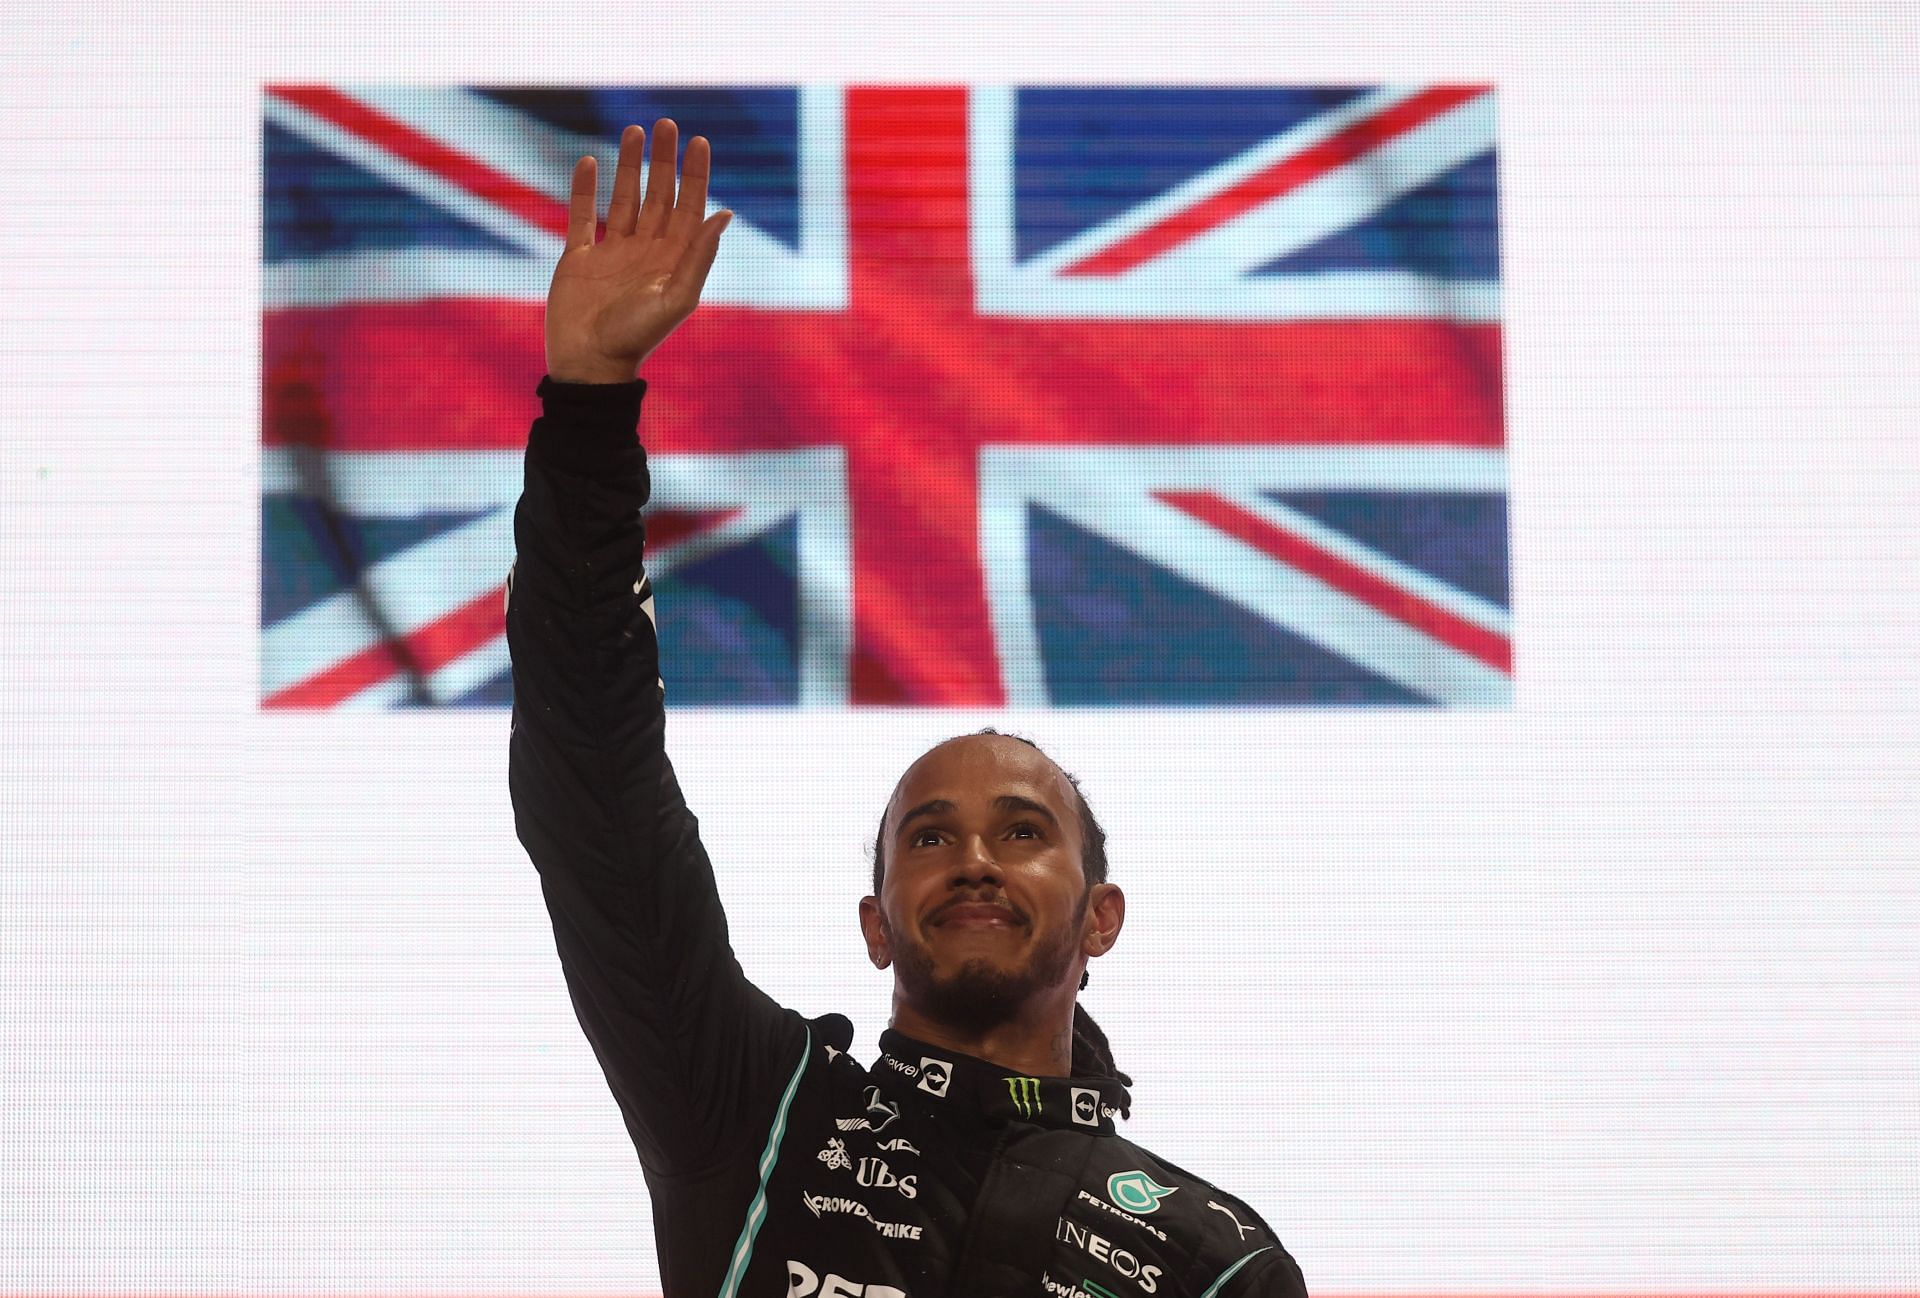 F1 Grand Prix of Qatar - Lewis Hamilton on the podium (Photo by Lars Baron/Getty Images)